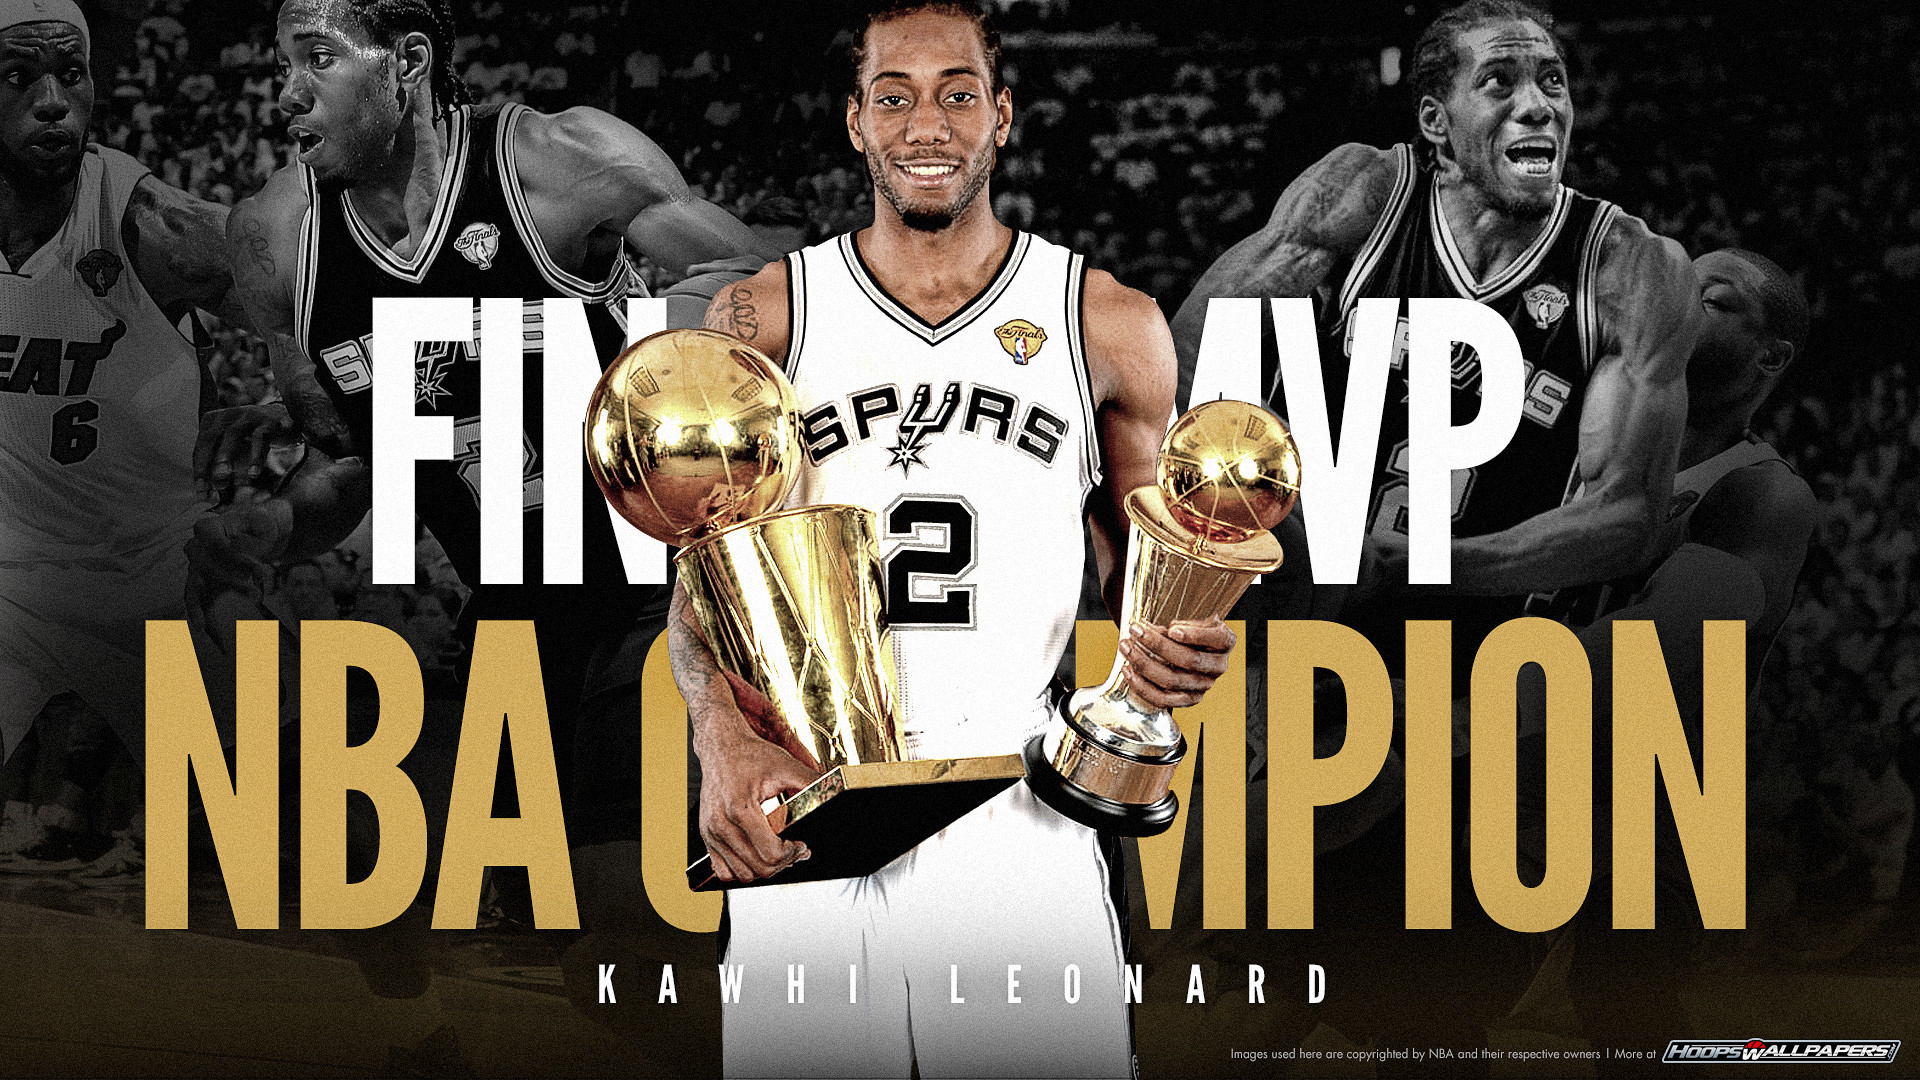 NBA Champion & Finals MVP Kawhi Leonard wallpaper (Click on the image for  the full HD resolution wallpaper)